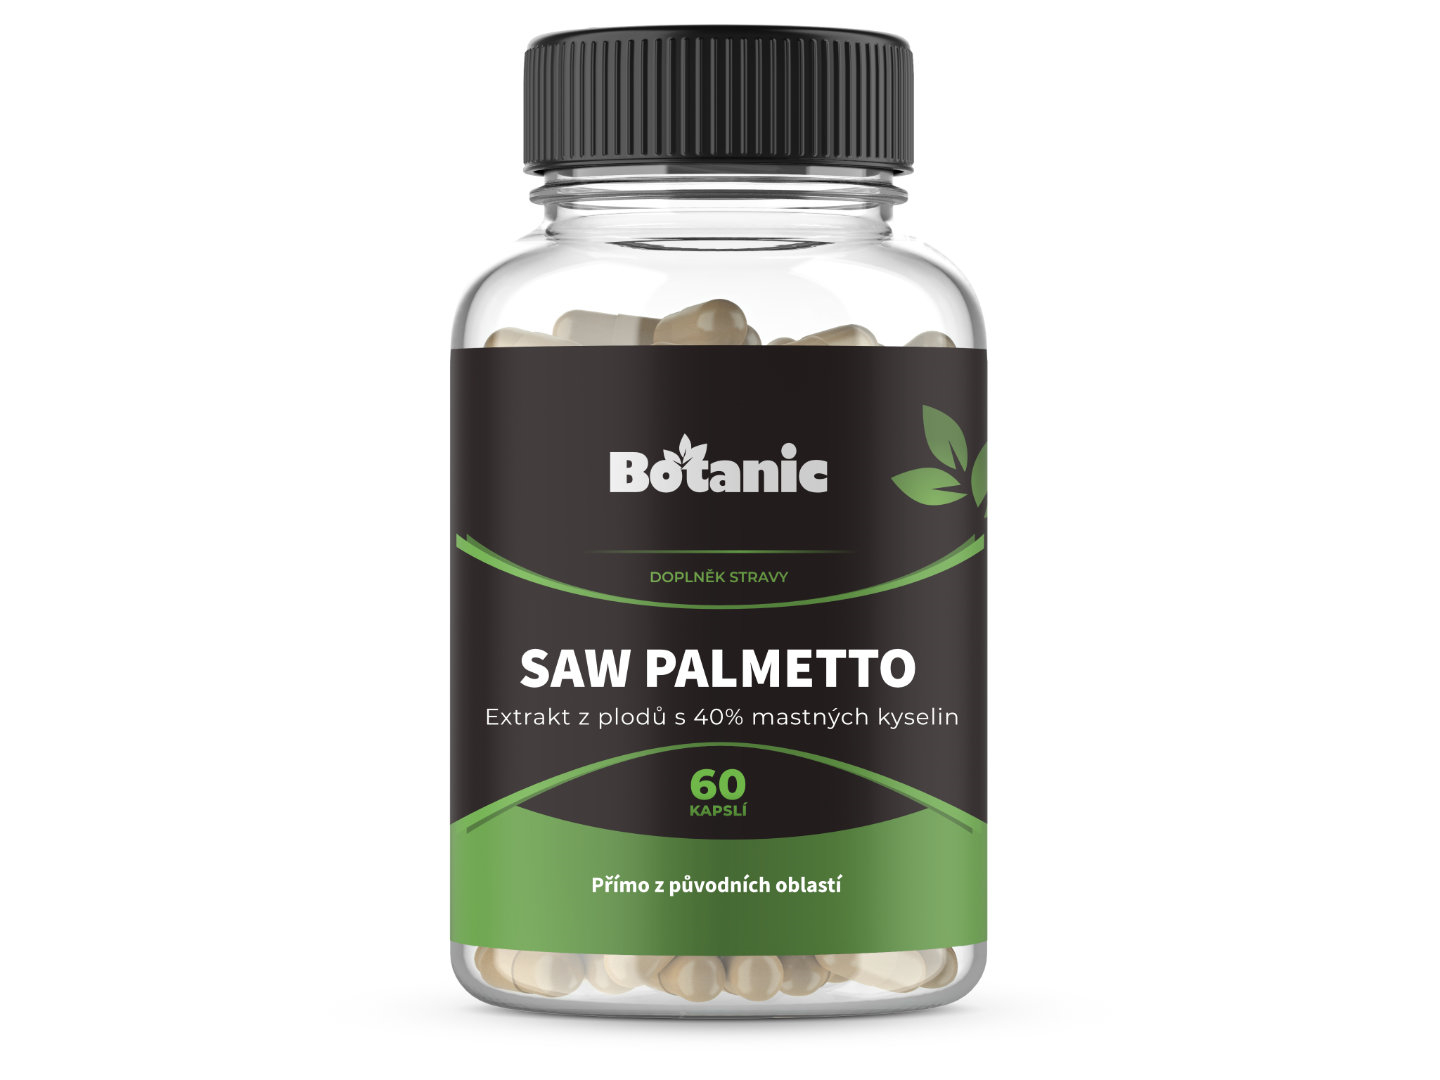 Botanic Saw palmetto - Extrakt z plodů s 40% mastných kyselin 60kap.